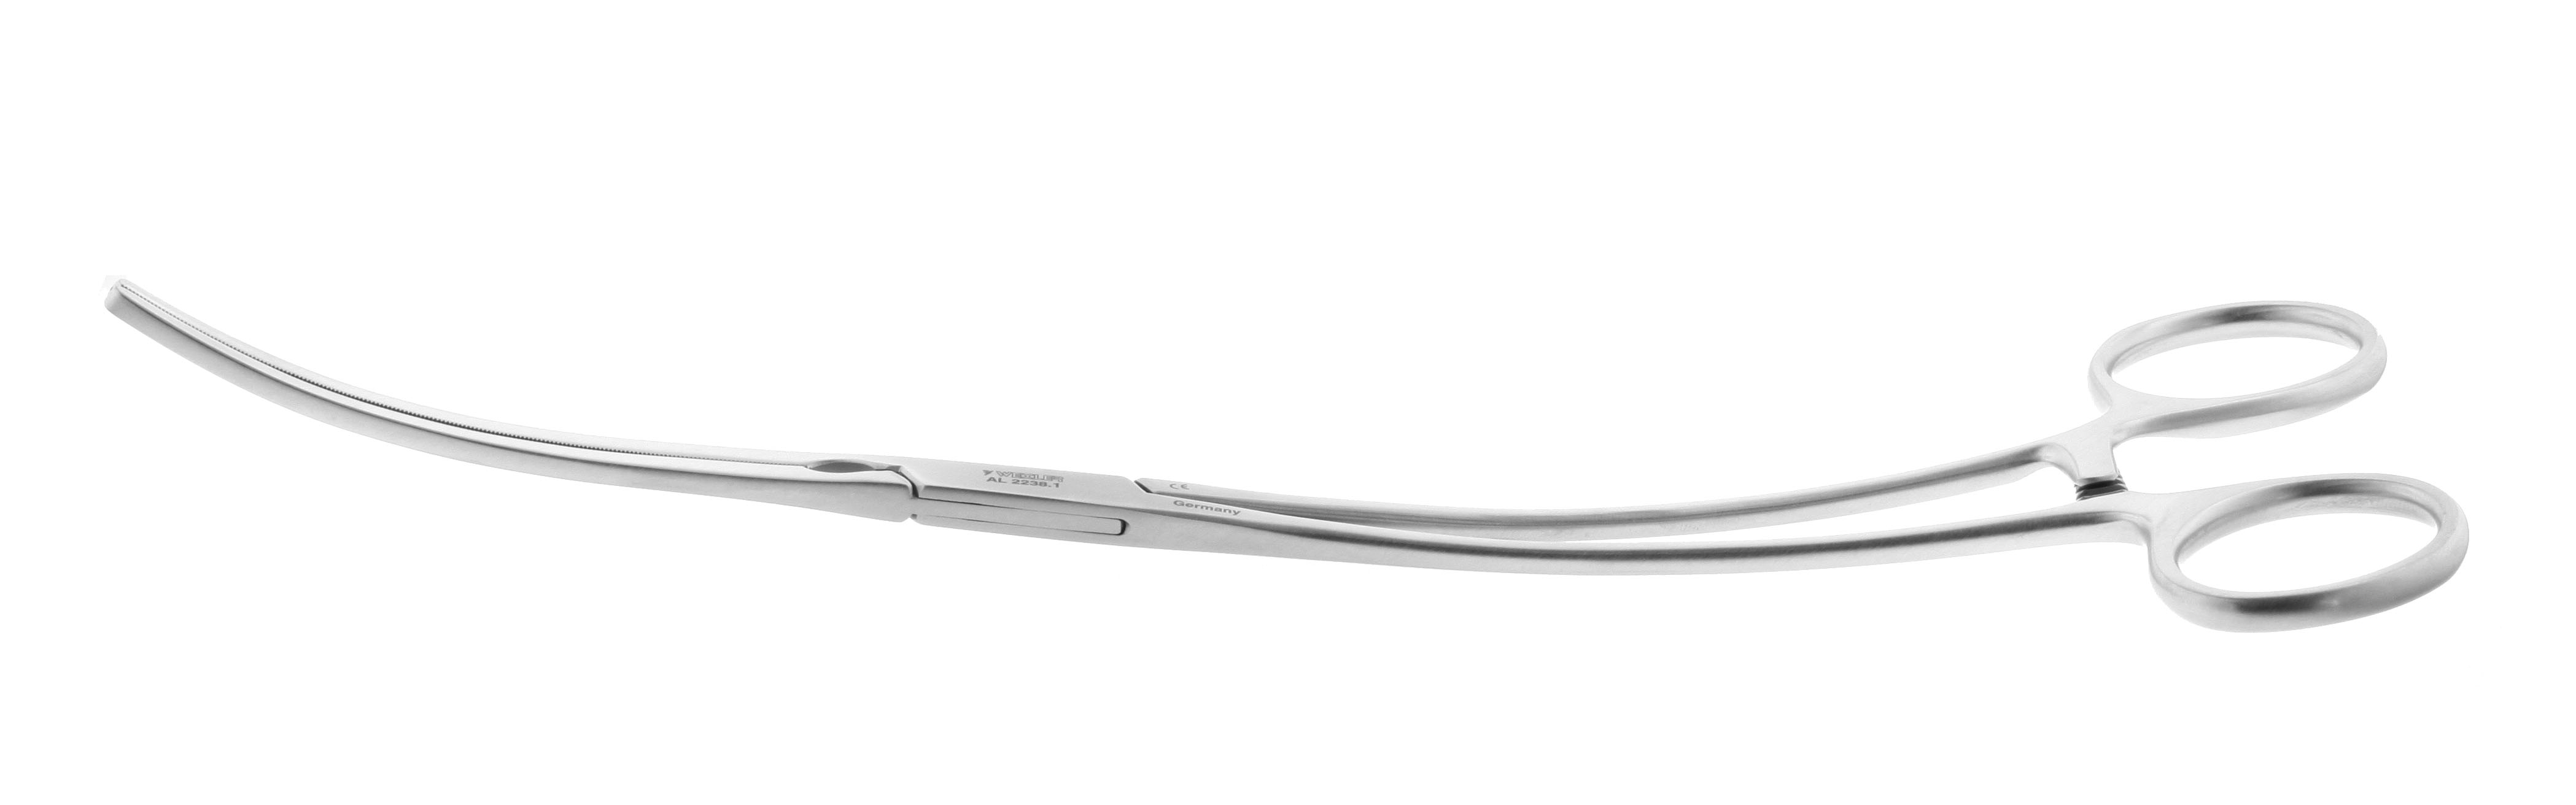 Wexler Aorta Aneurysm Clamp - 80mm Curved Cooley Atraumatic jaws